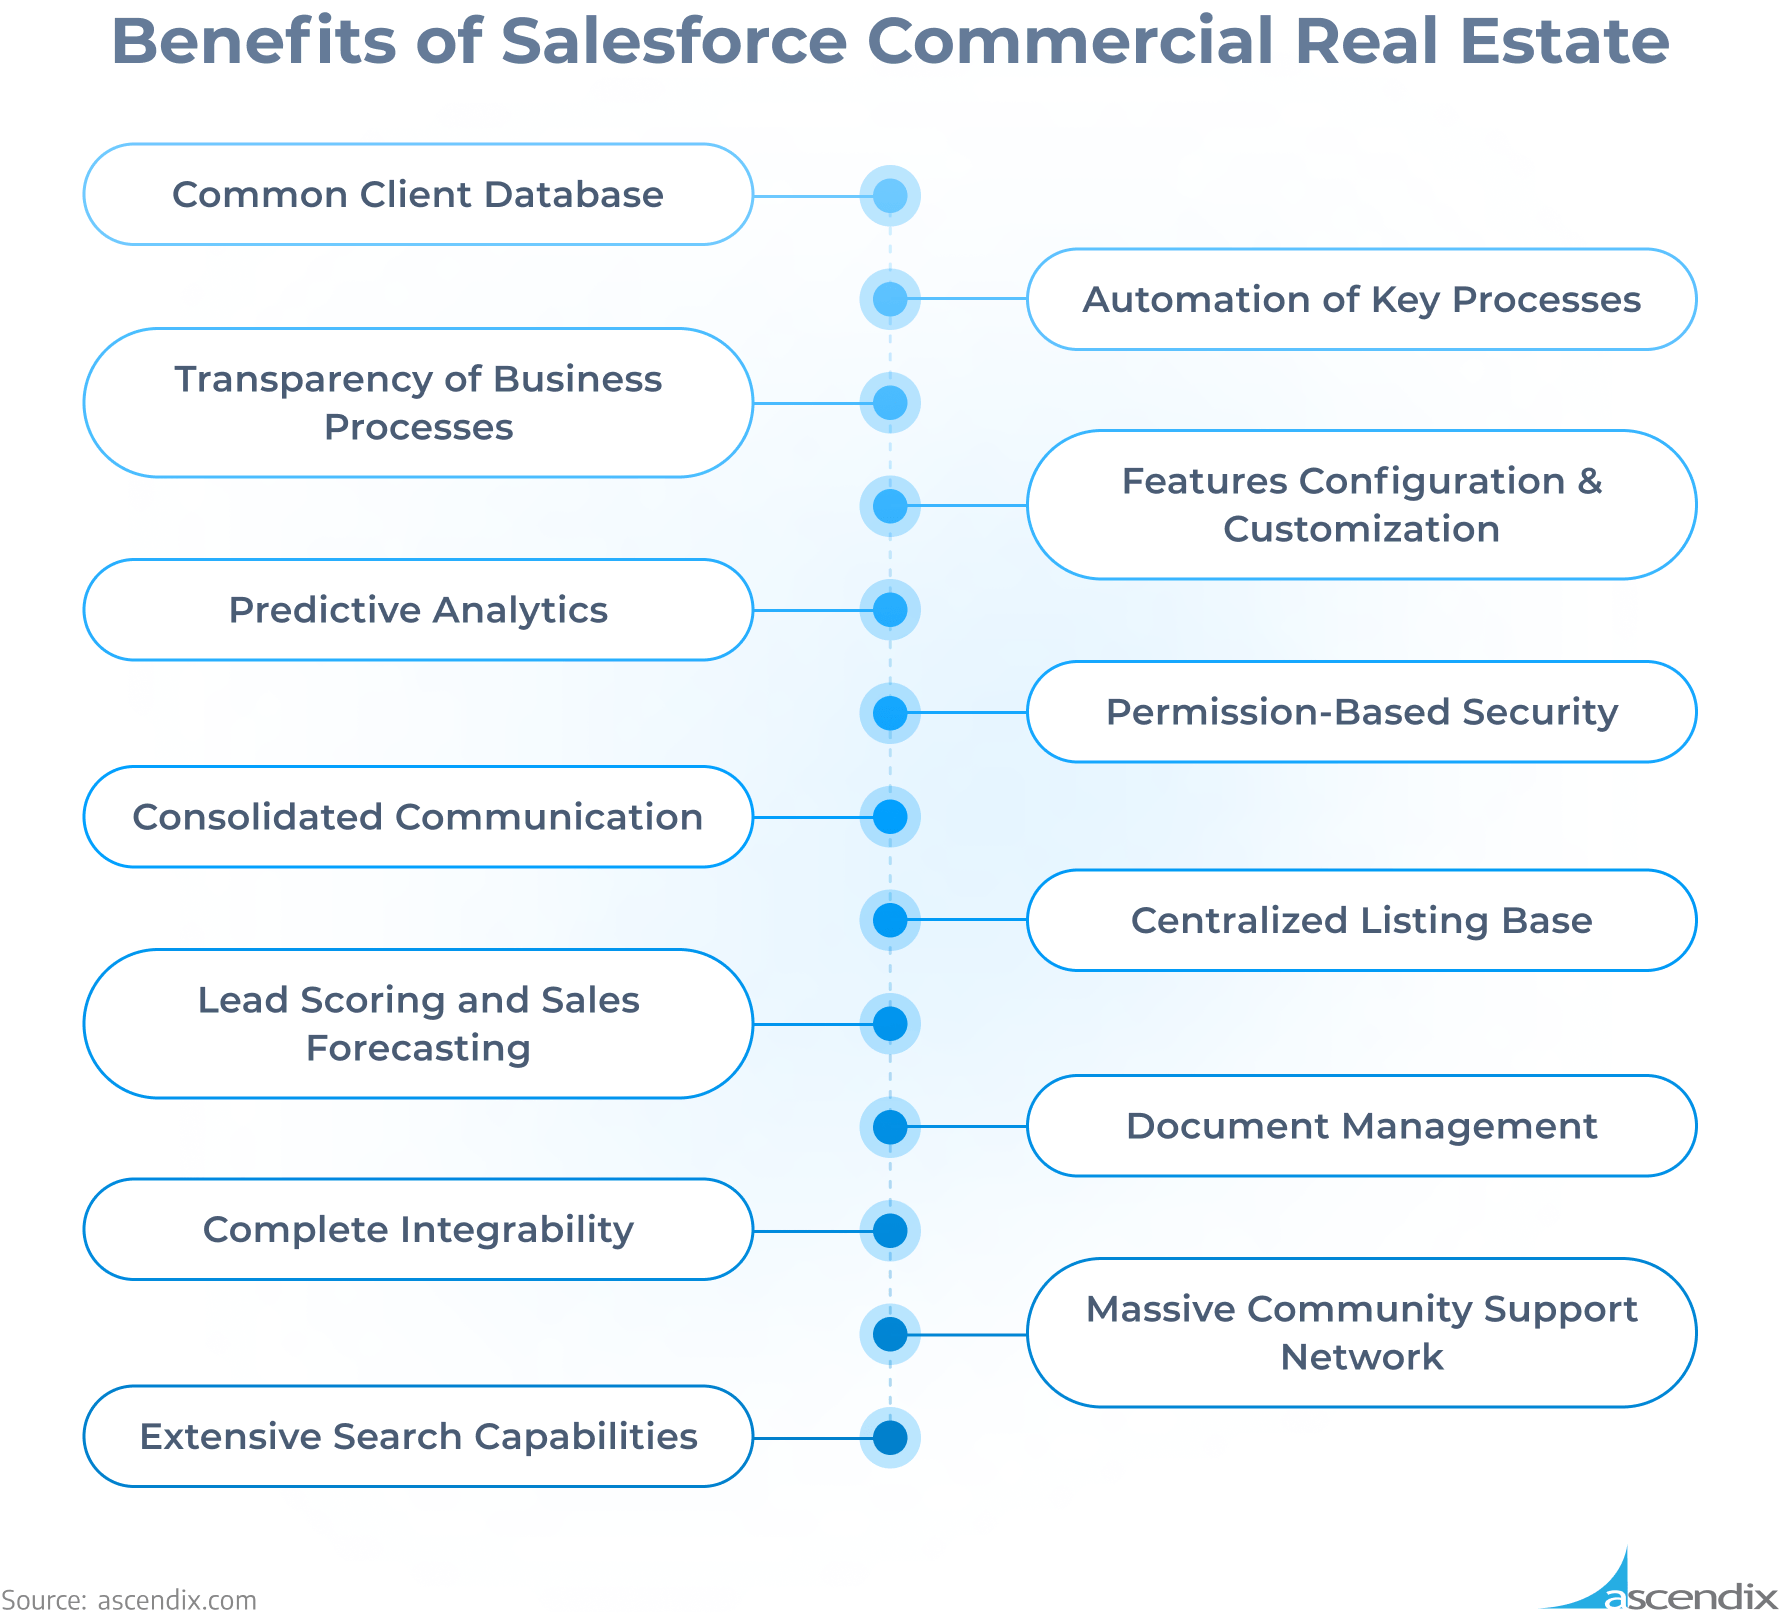 Benefits of Salesforce Commercial Real Estate | Ascendix